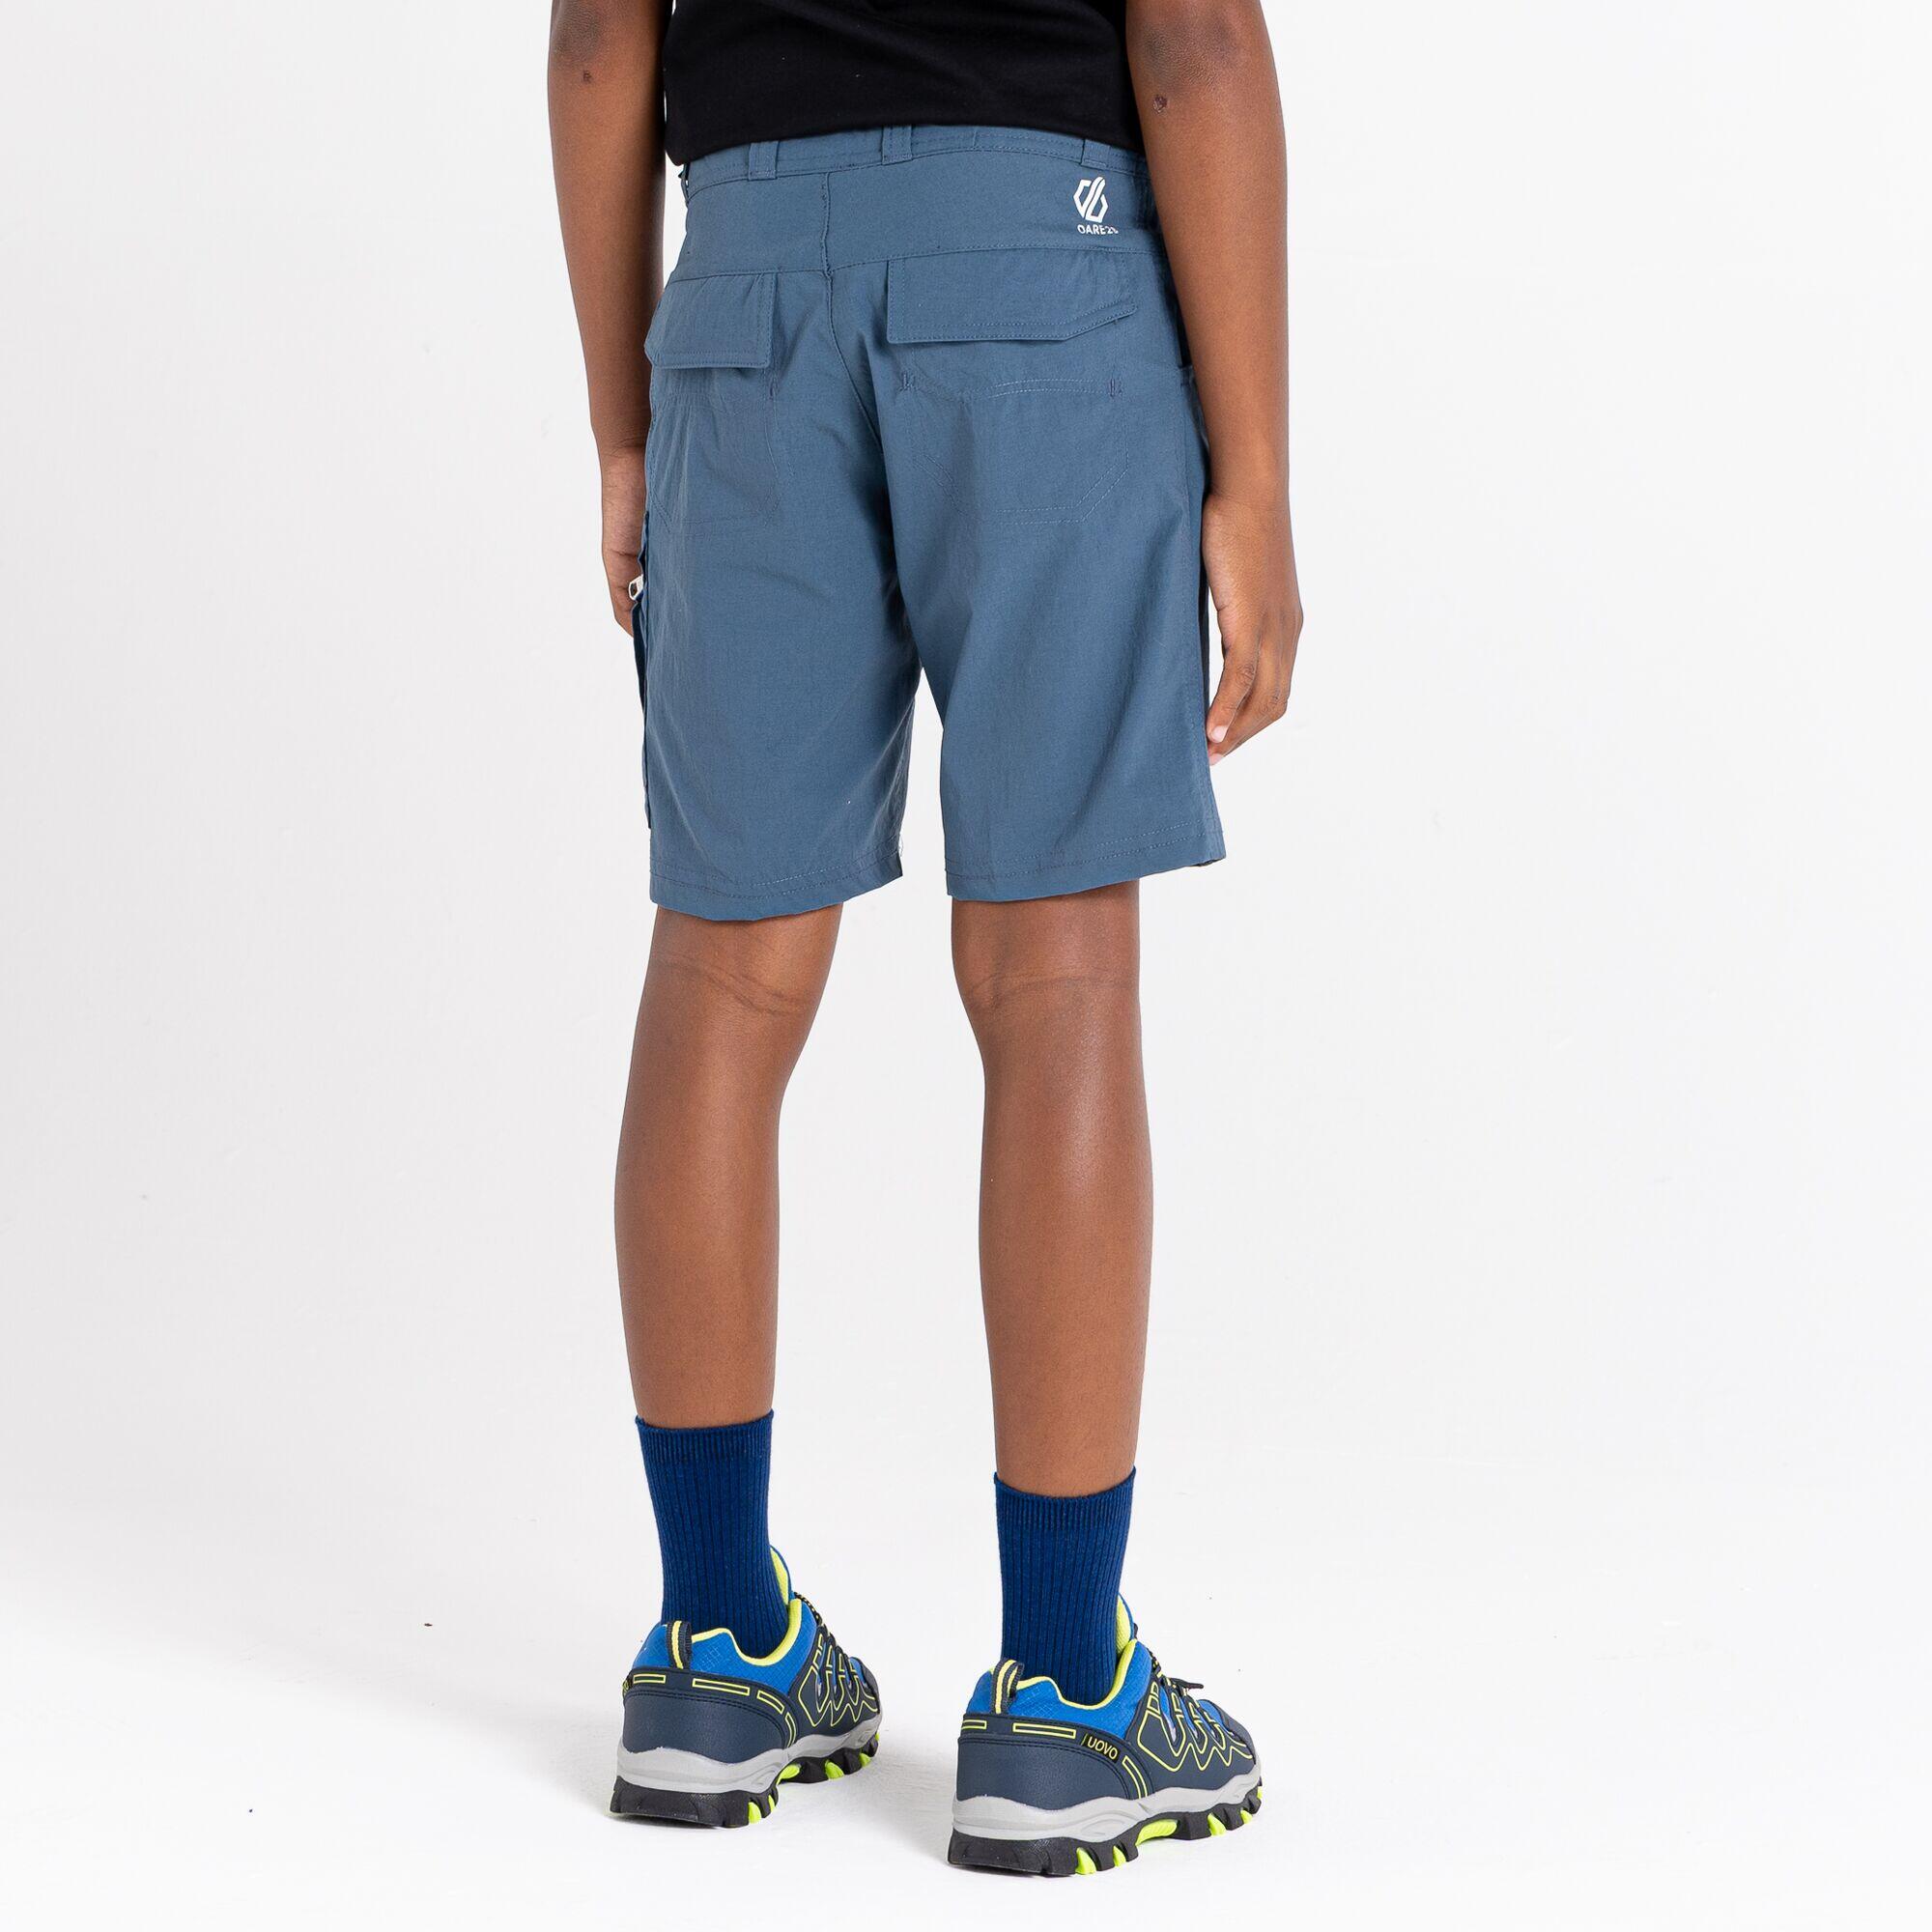 Reprise II Kids Hiking Shorts - Blue Orion Grey 4/5